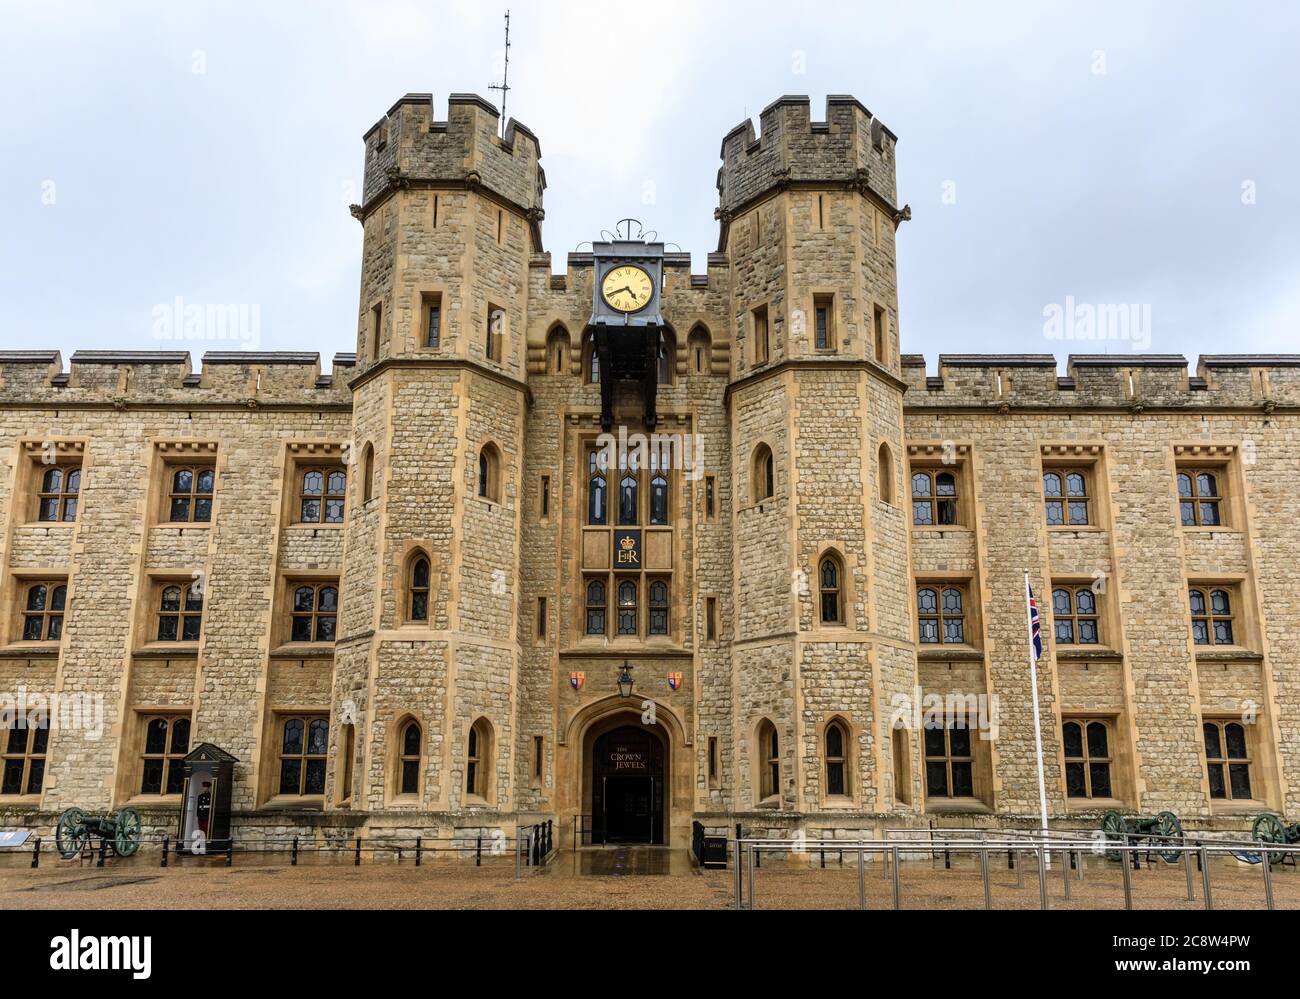 Waterloo Barracks and Jewel House, wjich houses the British Crown Jewels, Tower of London, England, UK Stock Photo